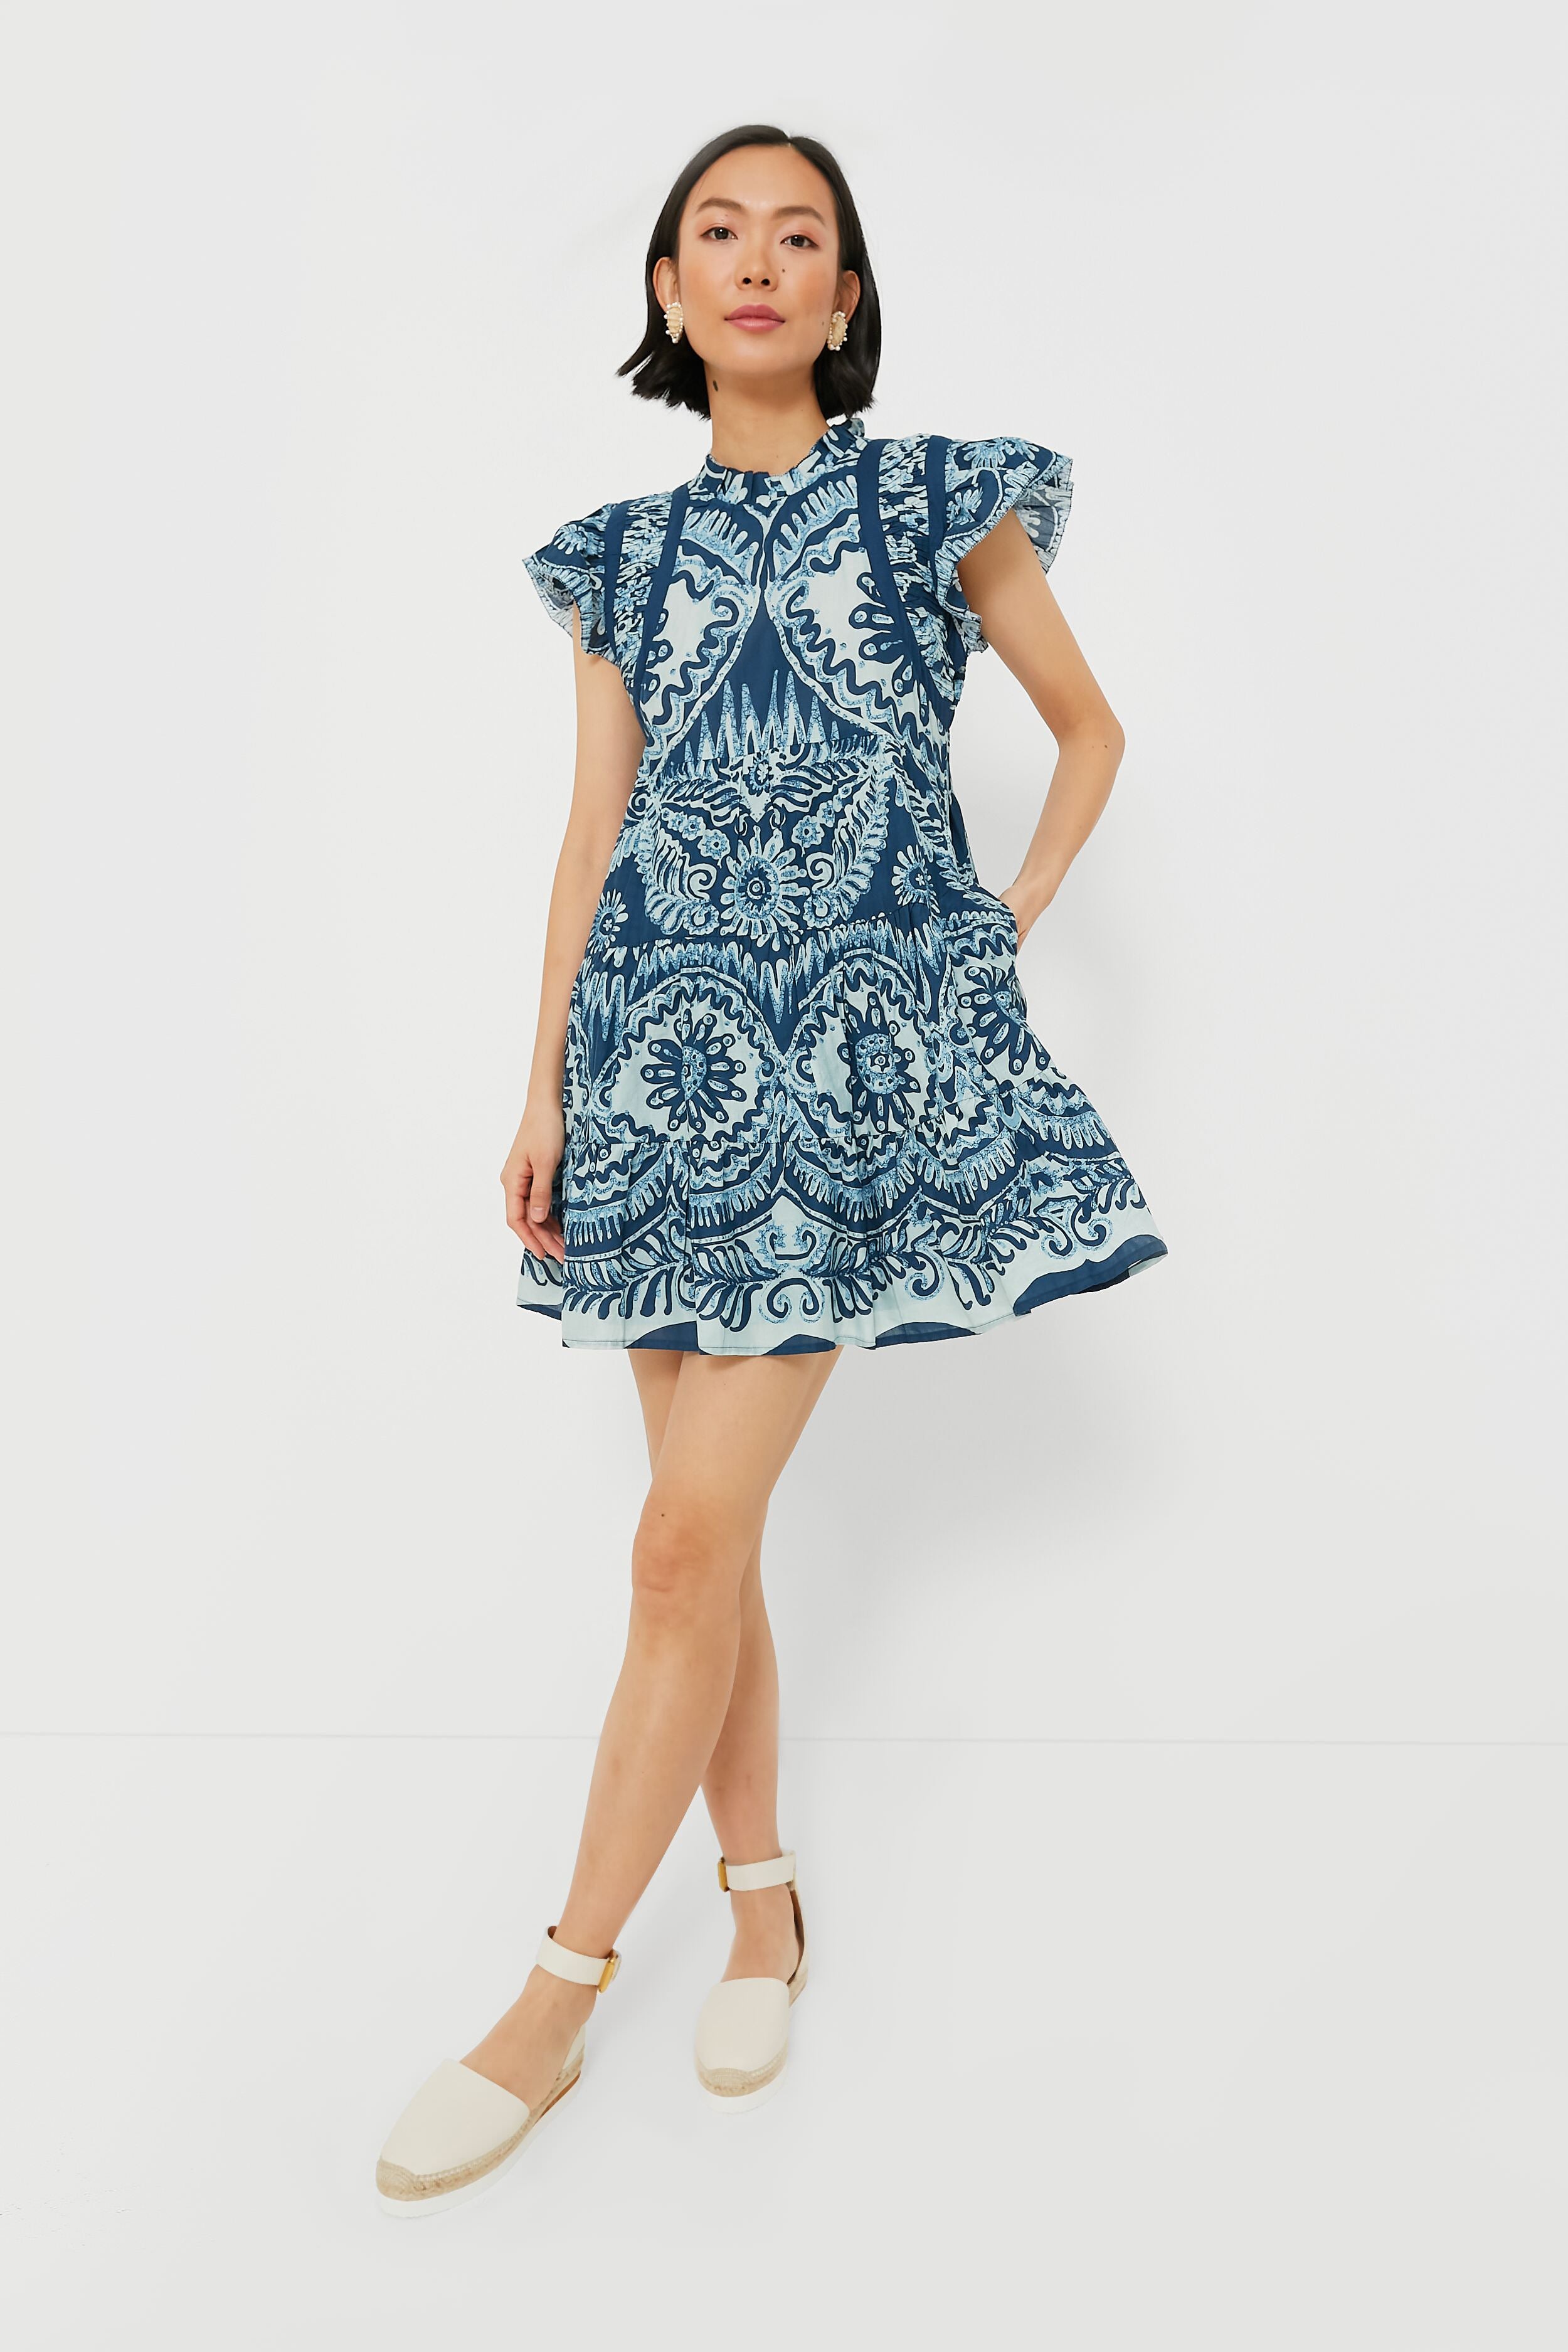 Tunic New Dress | Sea Exclusive Charlough York